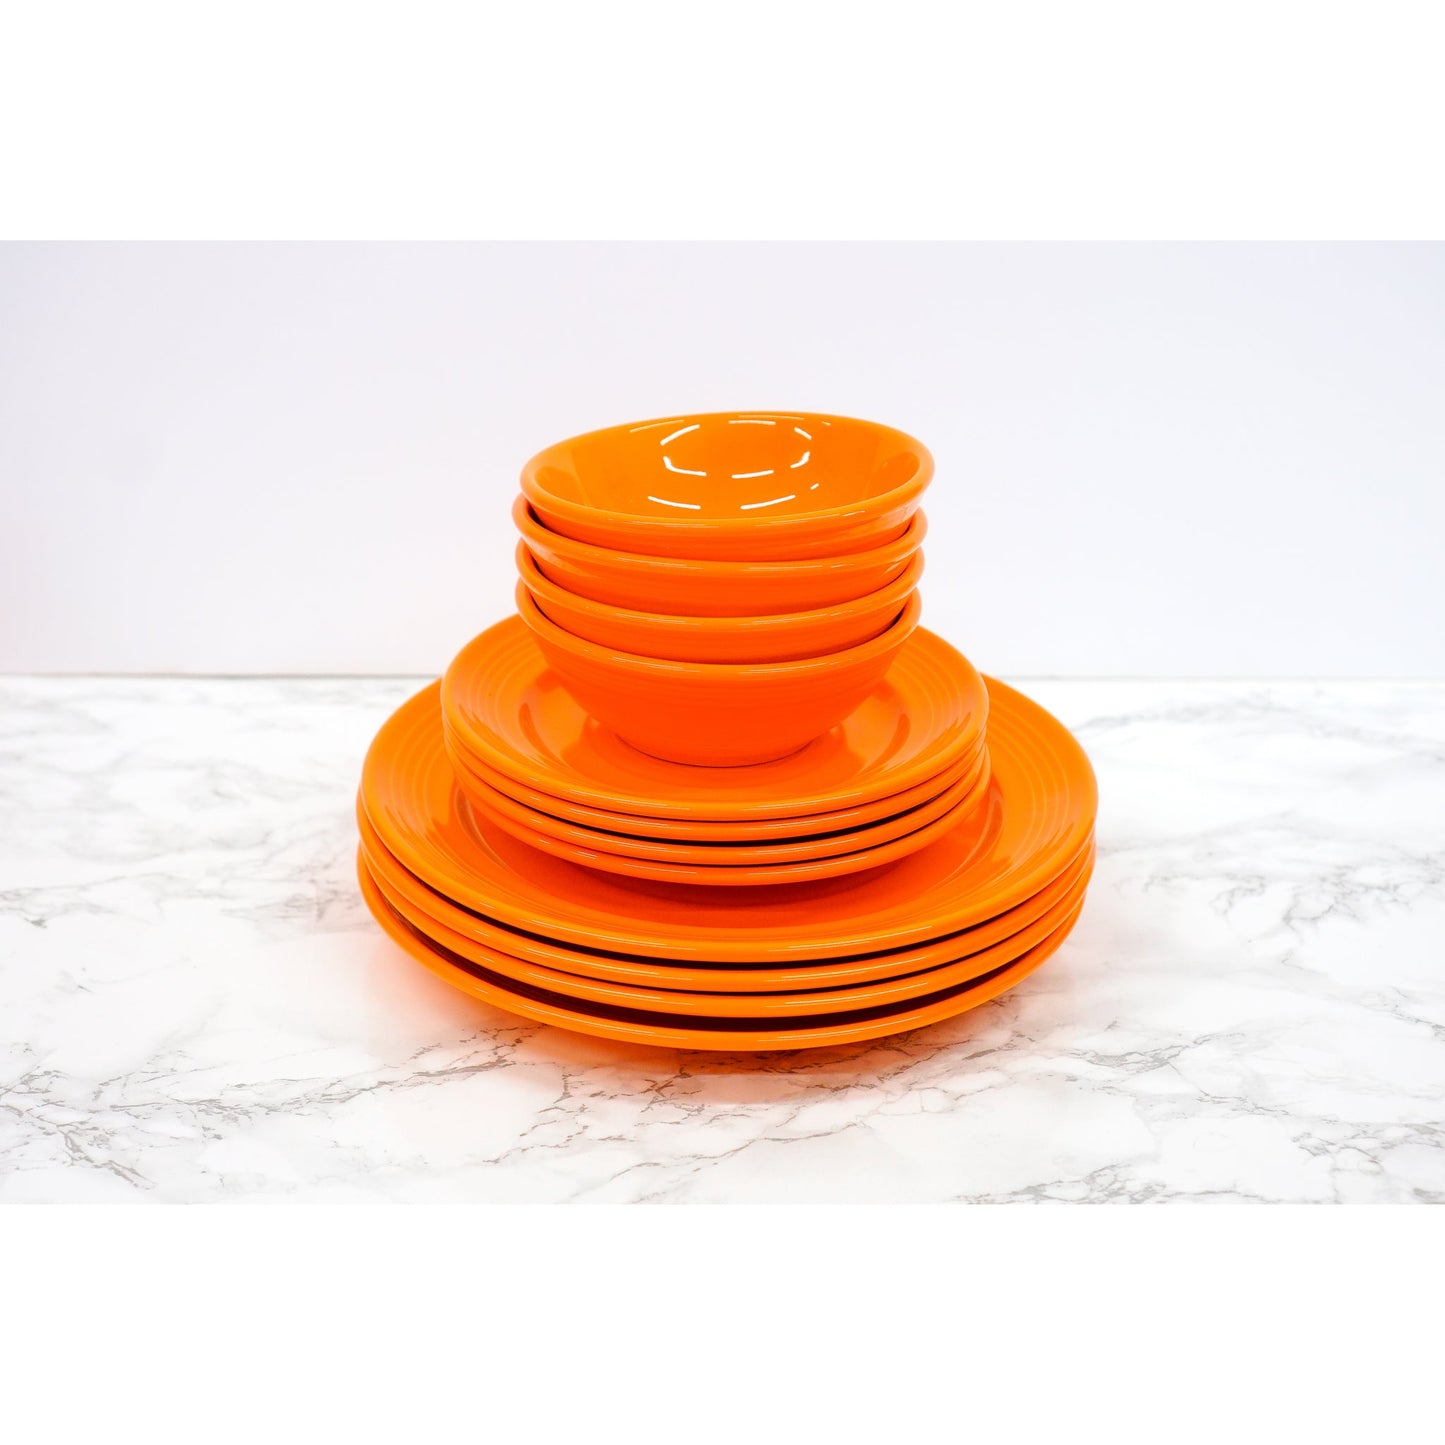 Tuxton Home Concentrix 18-Piece Ceramic Stoneware Service Set For 6